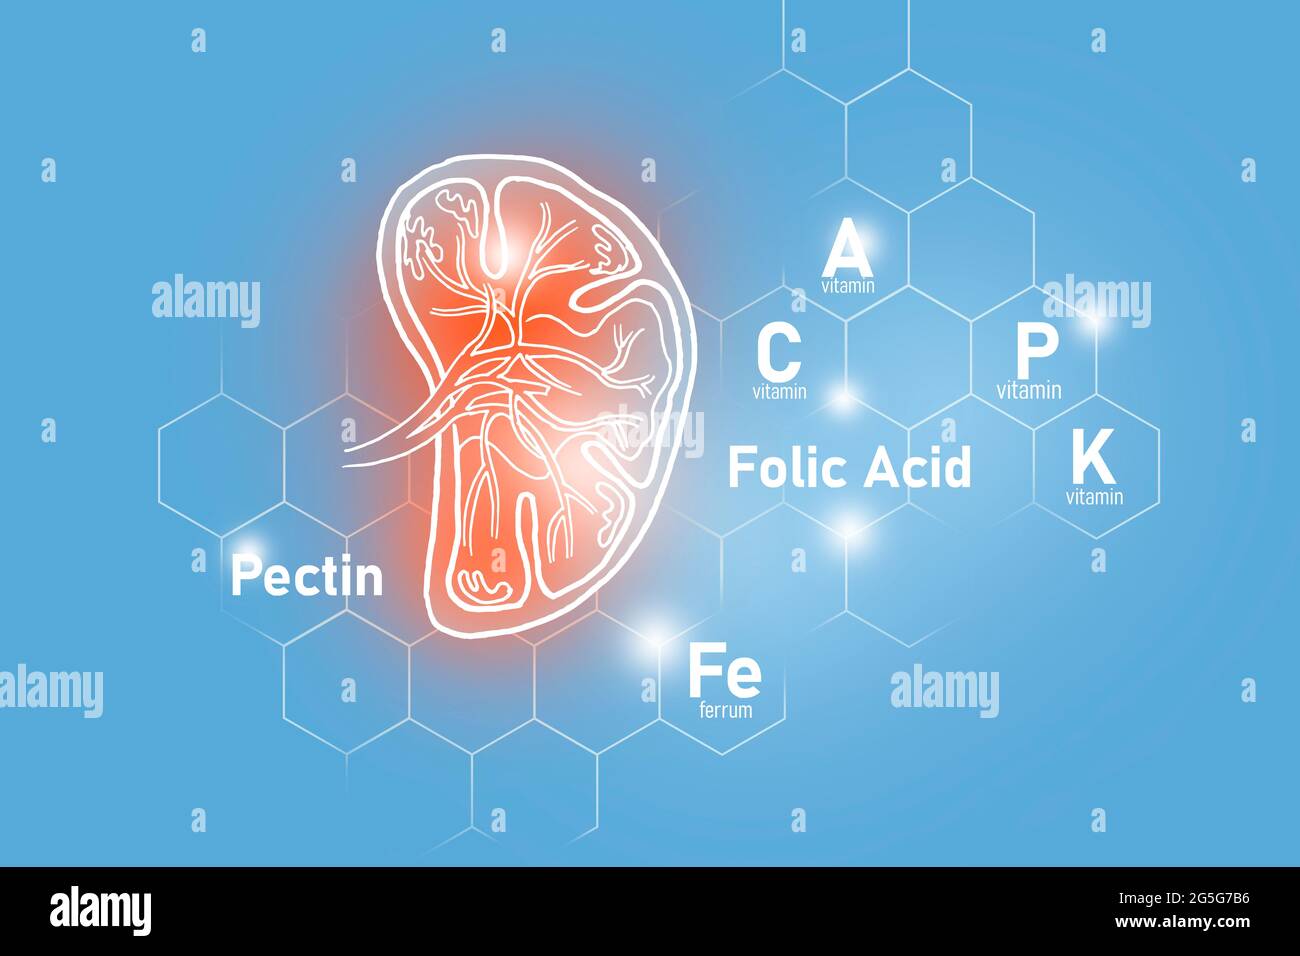 Essential nutrients for Spleen health including Pectin, Folic Acid, Vitamin P, Ferrum.Design set of main human organs on light blue background. Stock Photo